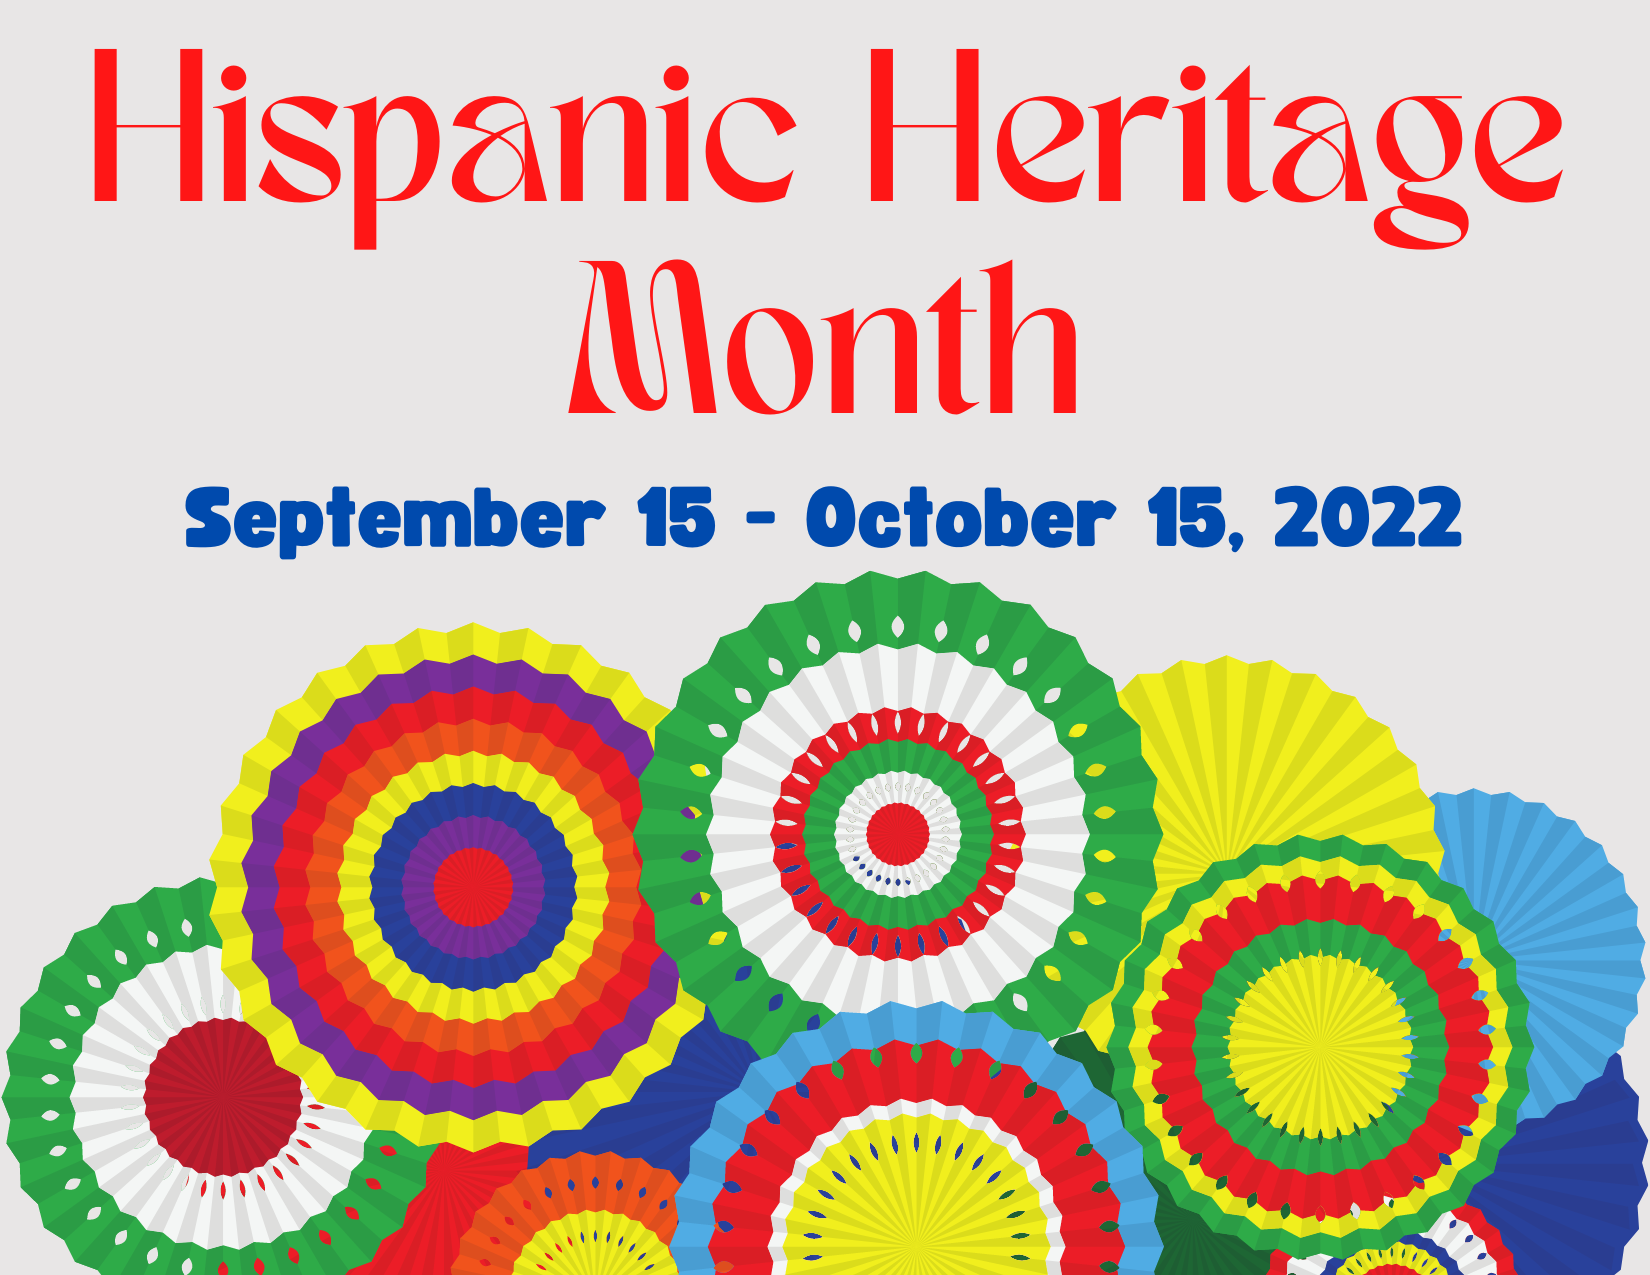 celebrating-hispanic-heritage-month-in-the-charlotte-area-women-s